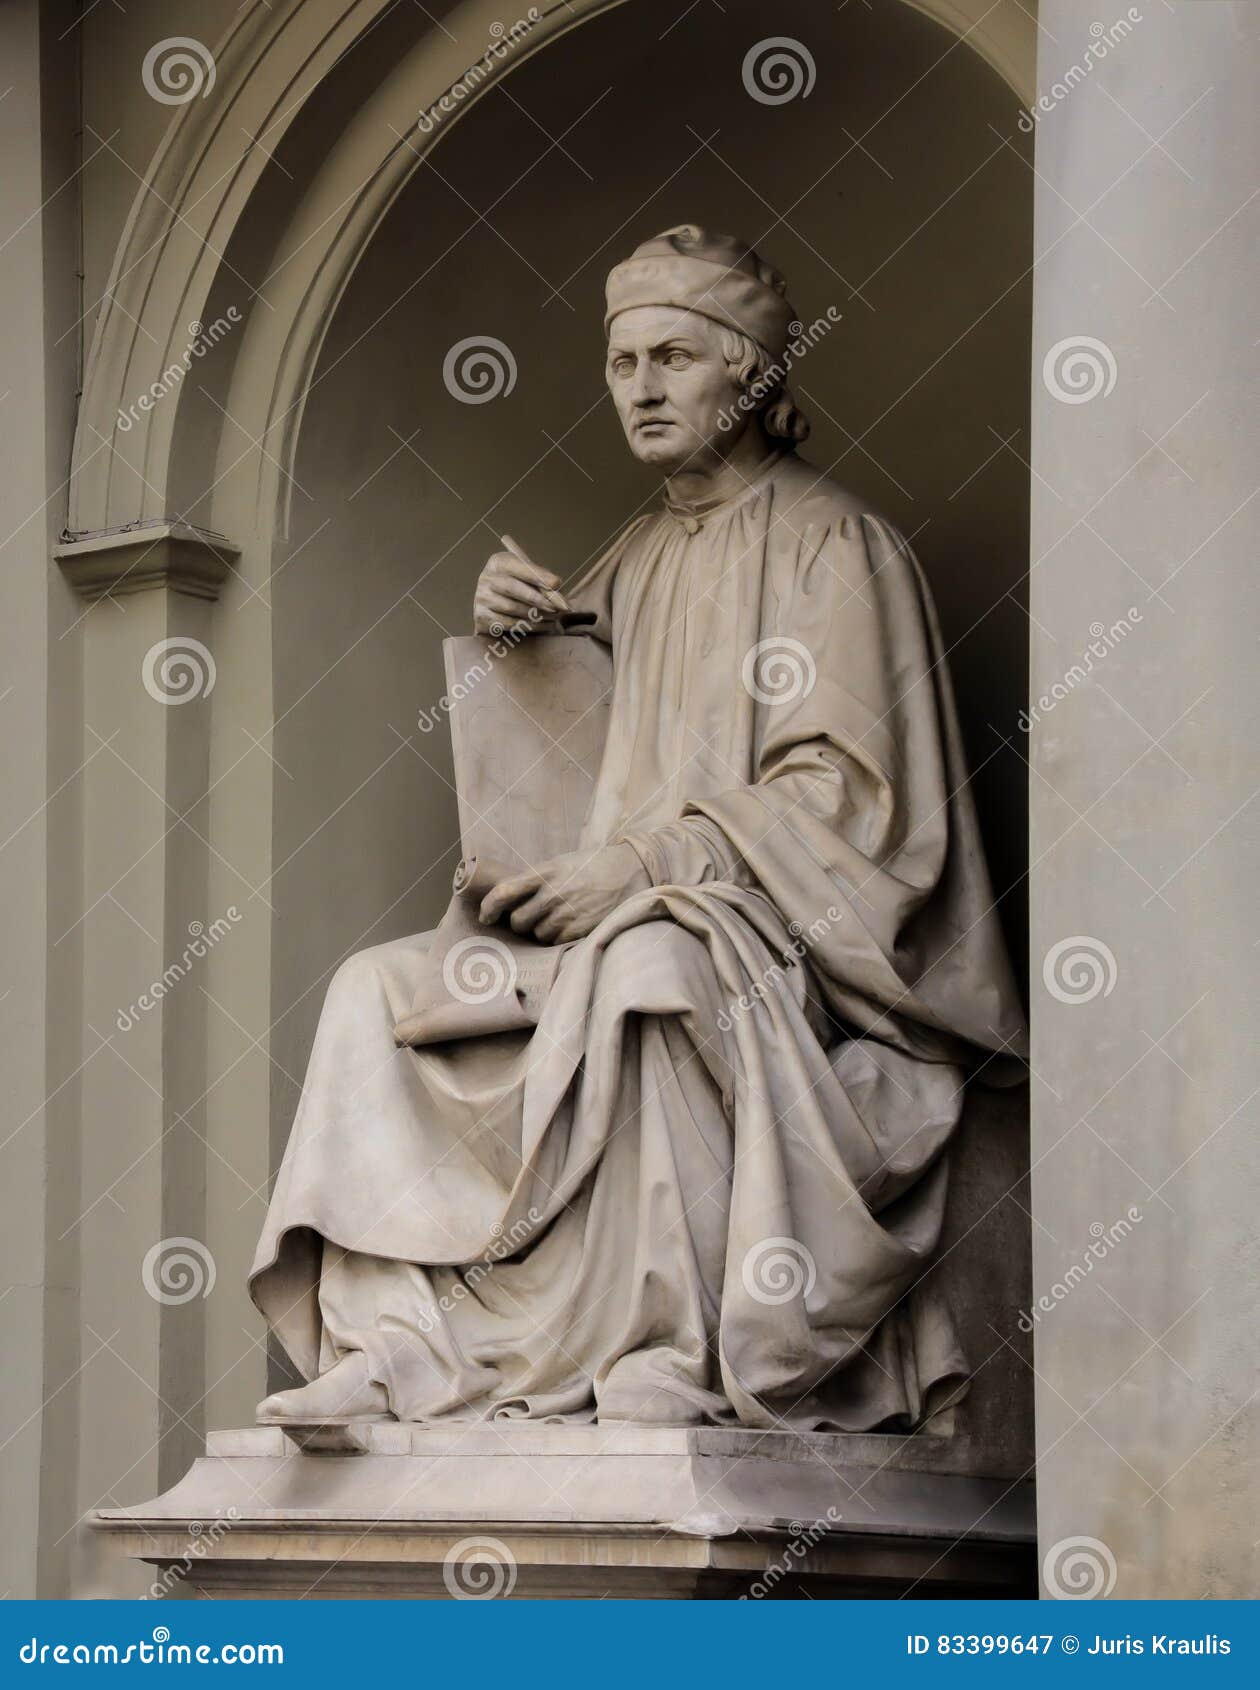 statue of arnolfo di cambio by luigi pampaloni he was a famous italian renaissance architect